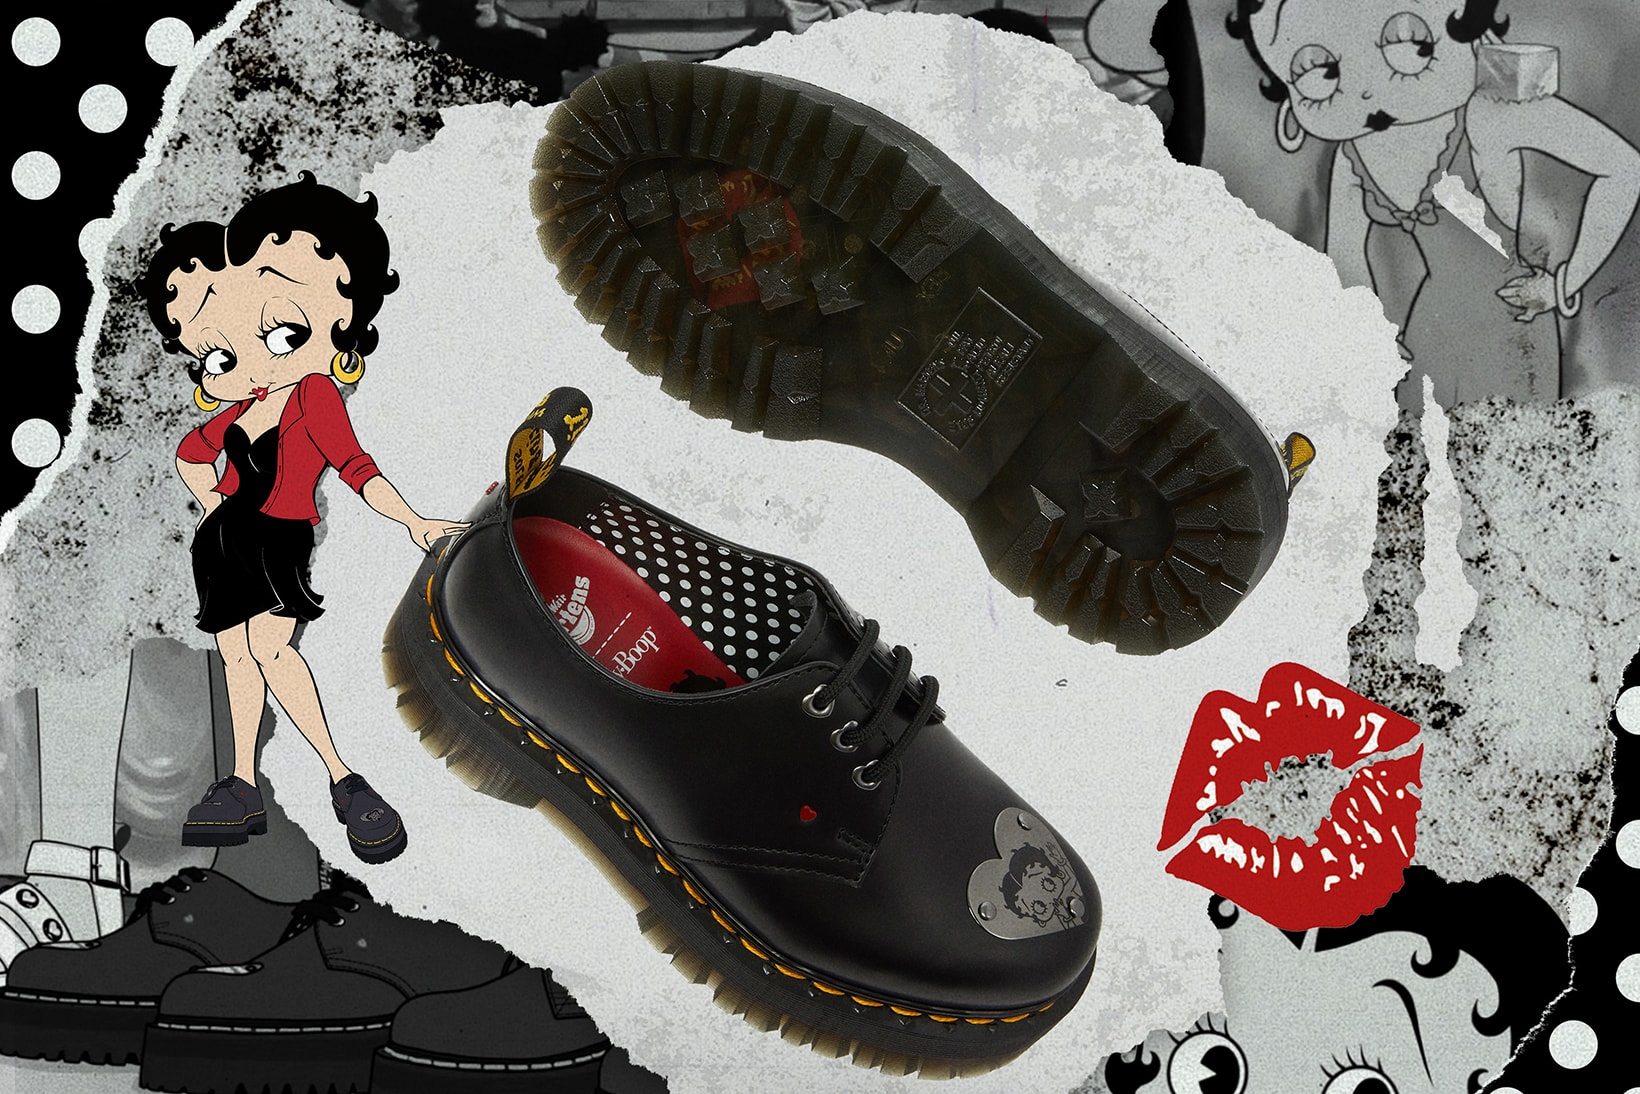 Dr. Martens Betty Boop Footwear Collaboration 1461 Quad Clarissa Jadon